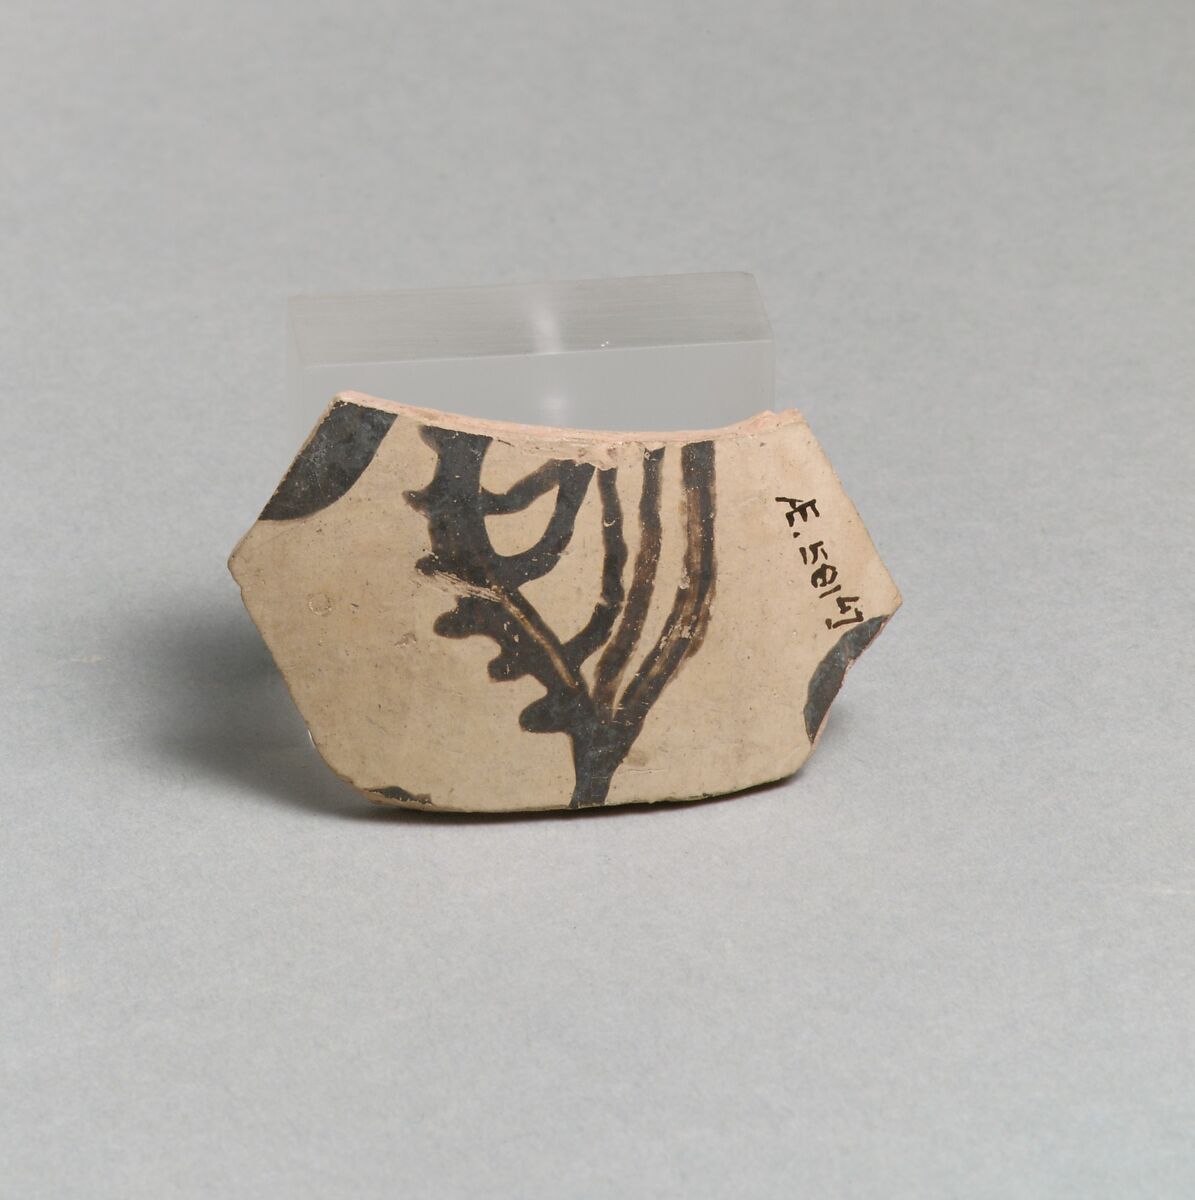 Terracotta vessel fragment with marine motif, Terracotta, Minoan 